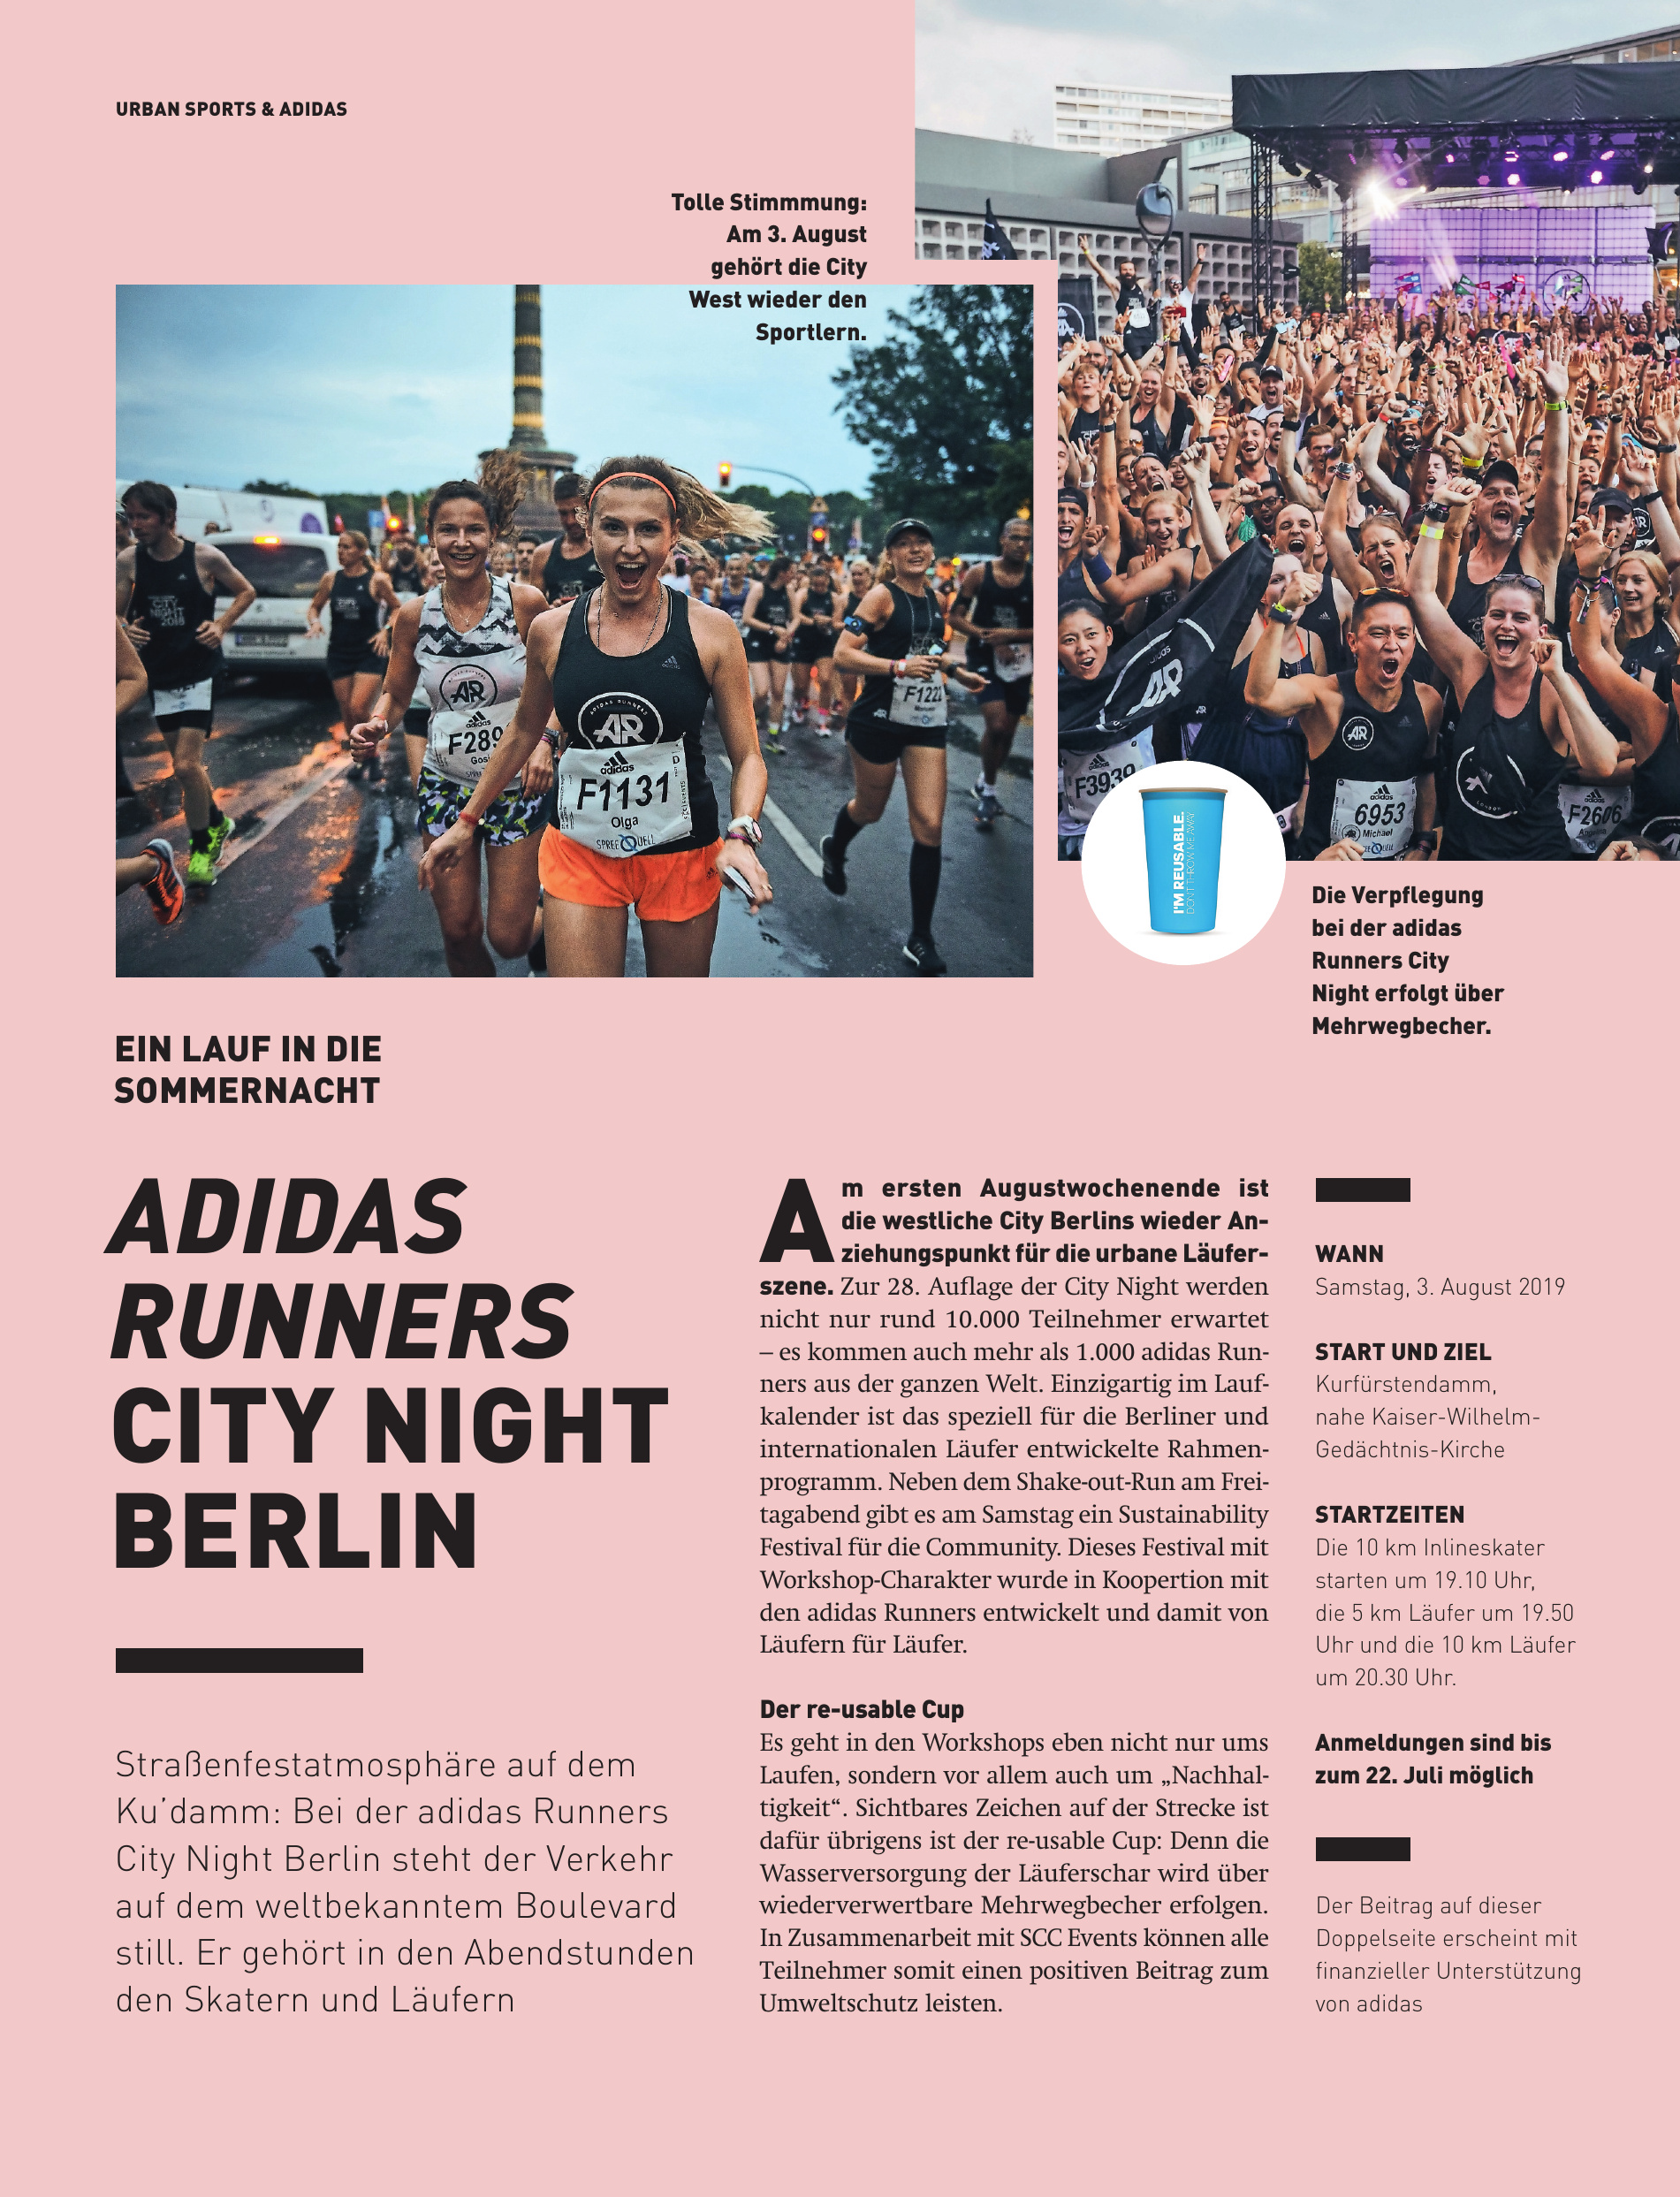 ADIDAS RUNNERS CITY NIGHT BERLIN